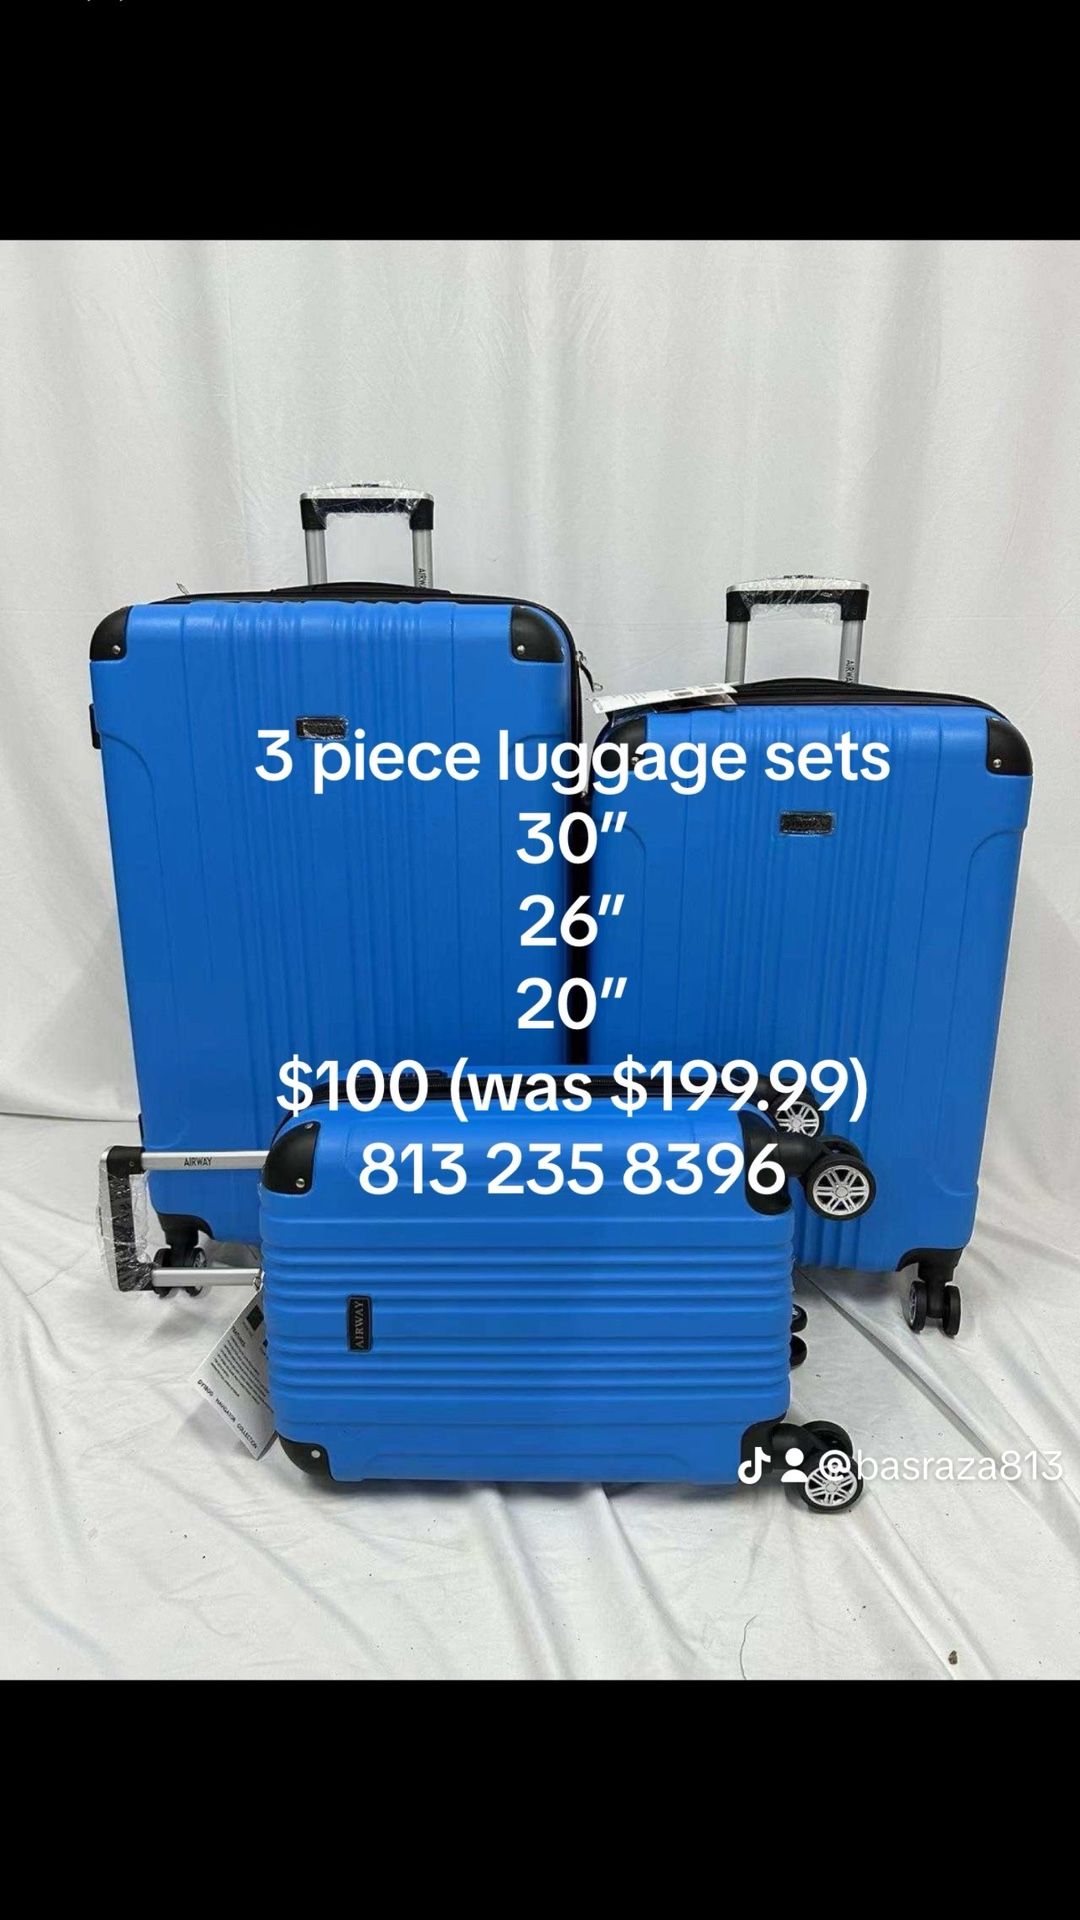 3piece luggage sets 30” 26” 20” 4 double wheels 🛞 tsa lock 🔒 aluminum trolly 🚨 